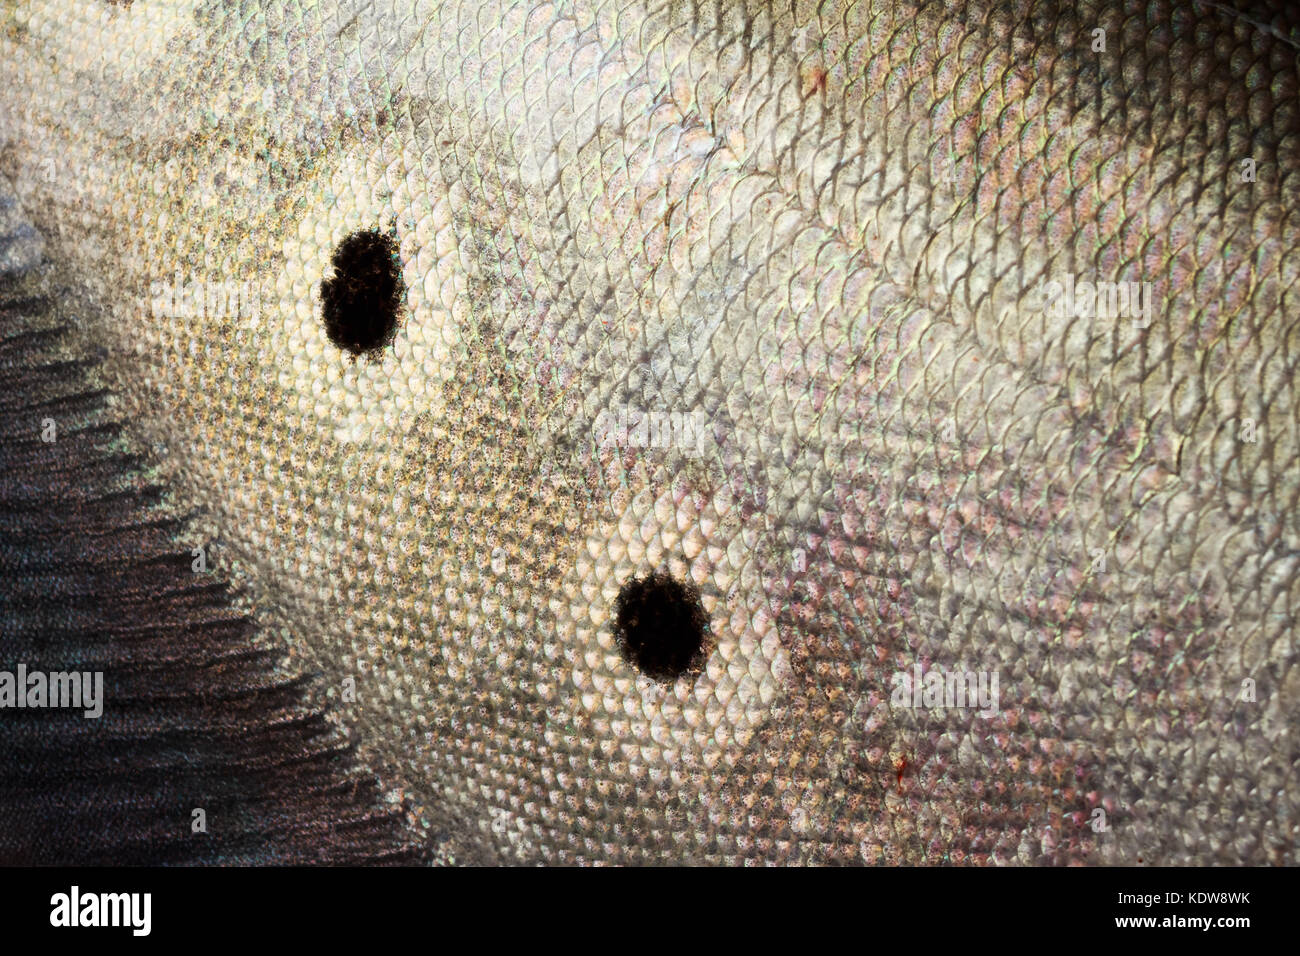 Notopterus chitala fish Stock Photo